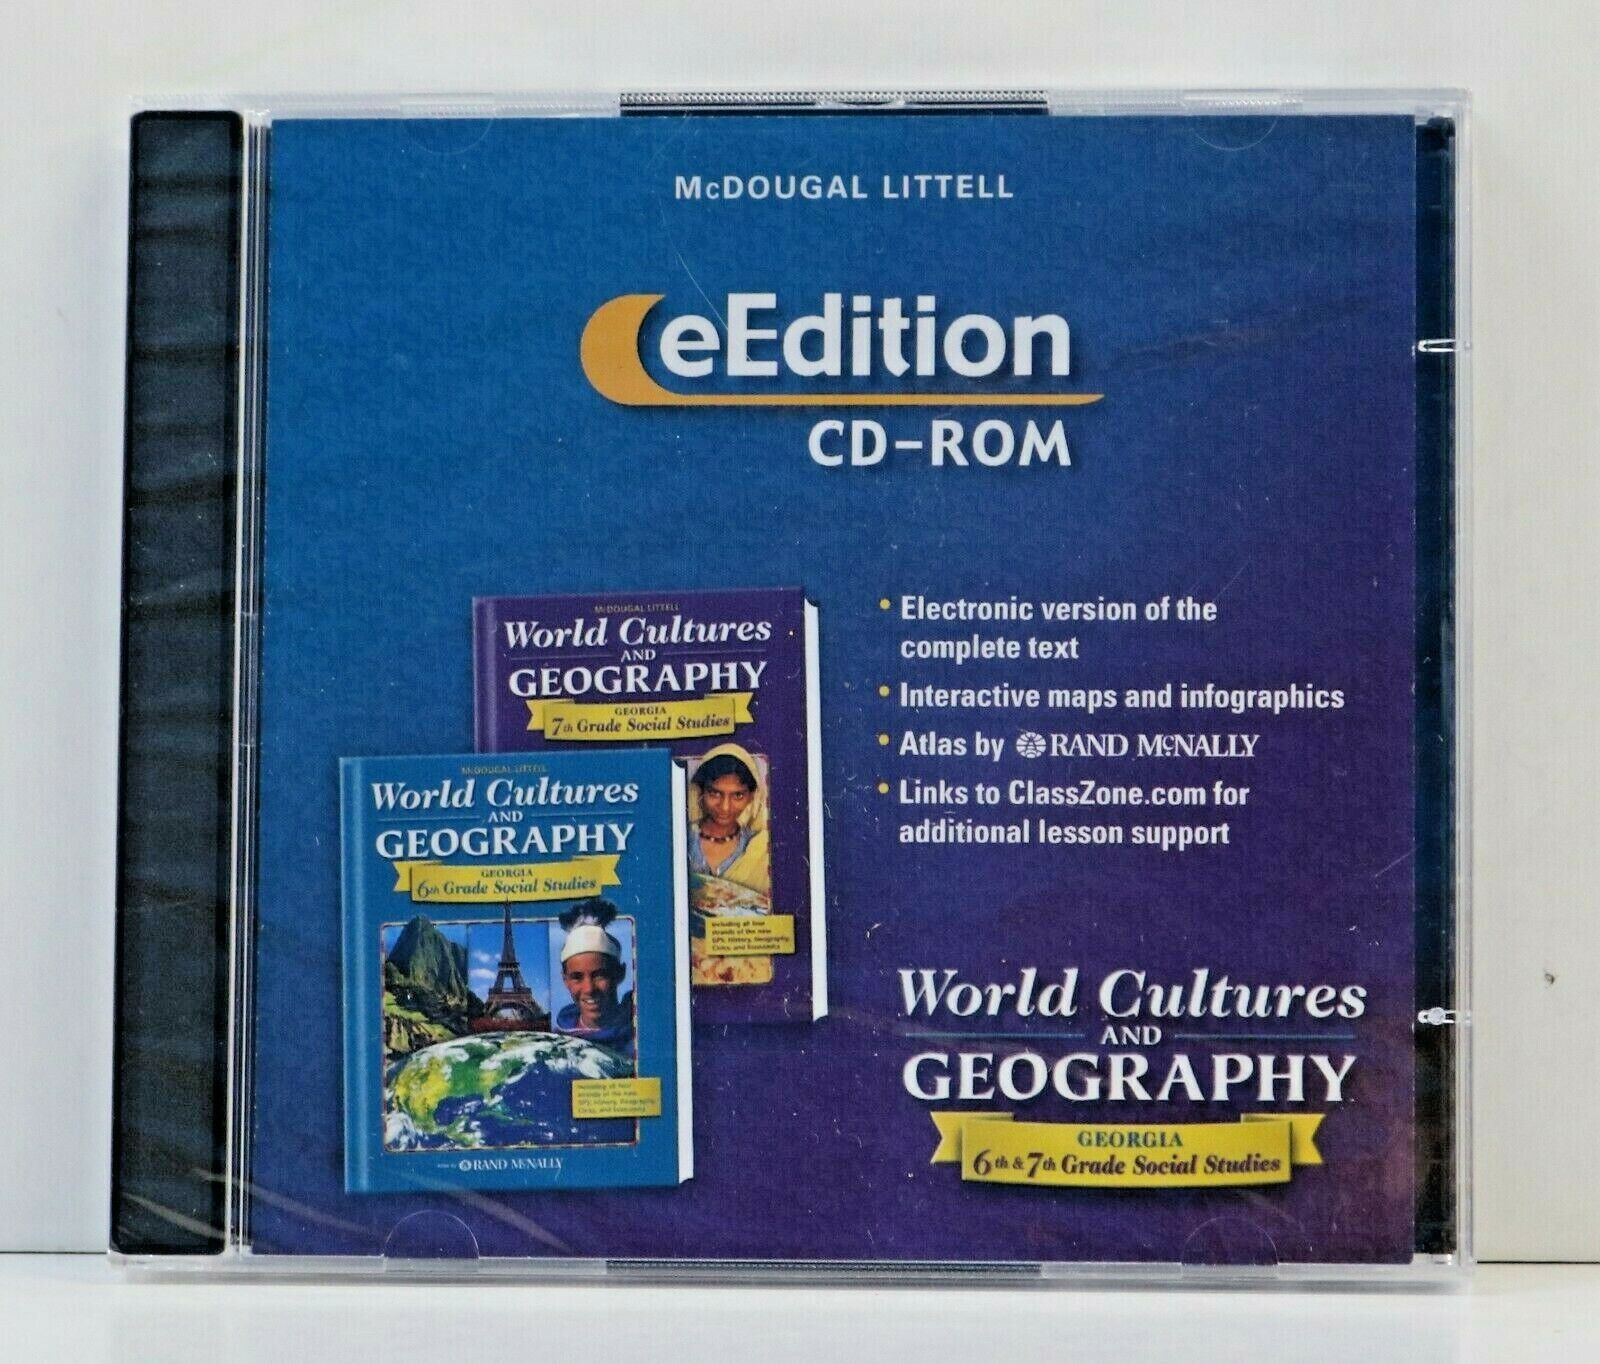 eEDITION CD-ROM WORLD CULTURES & GEOGRAPHY 6 & 7 GRADE - GEORGIA SOCIAL STUDIES